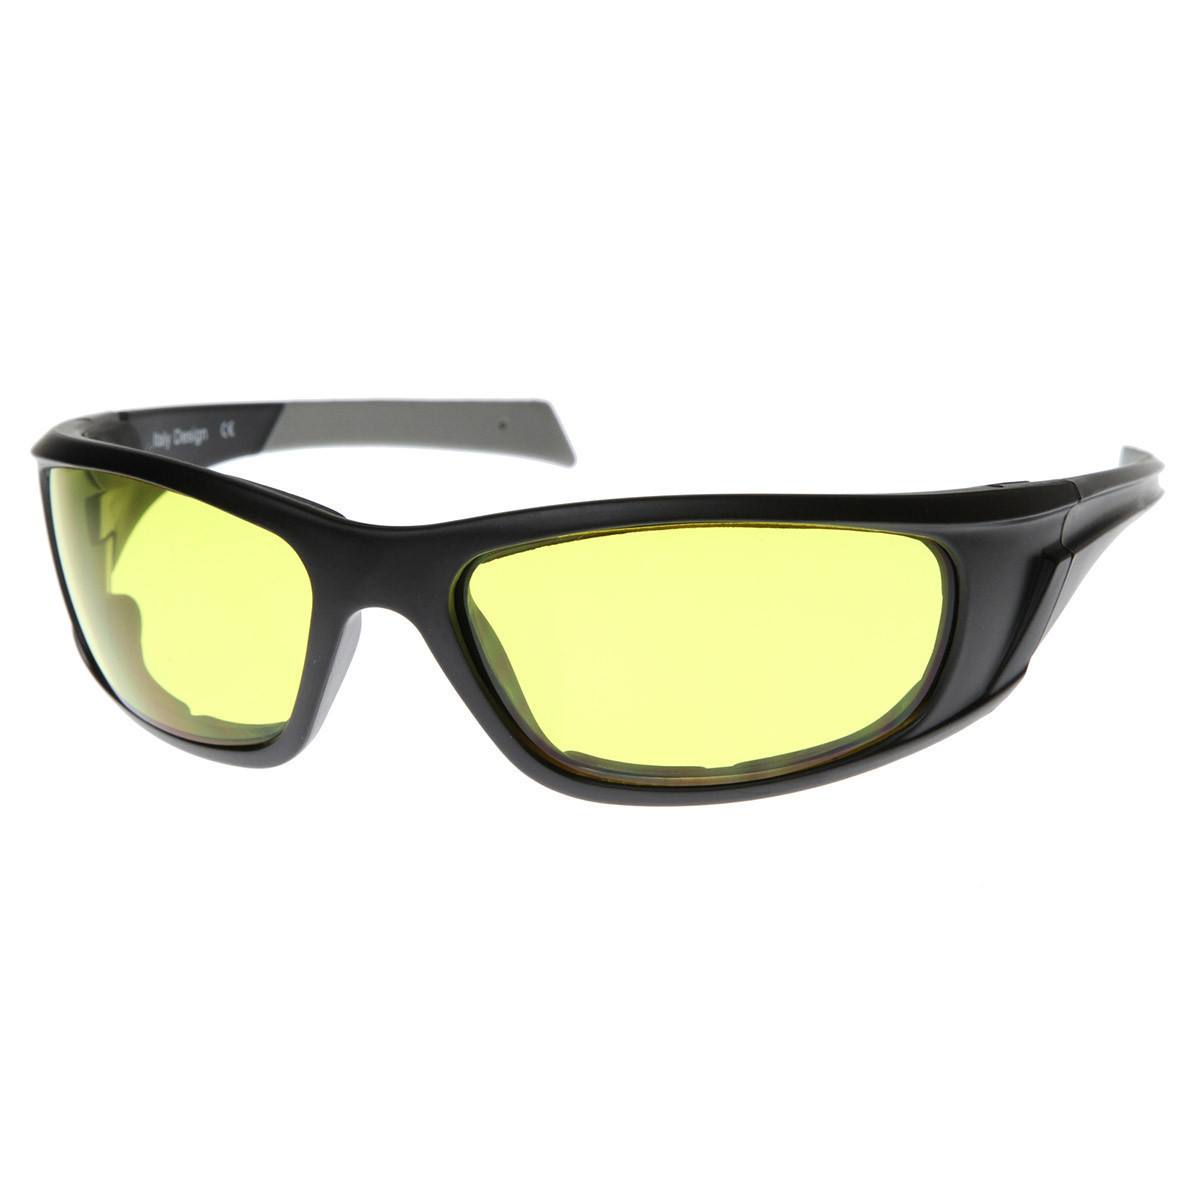 Safety Sports Protective Padded Sunglasses Eyewear Night Riding Glasses - 8326 - Black Smoke